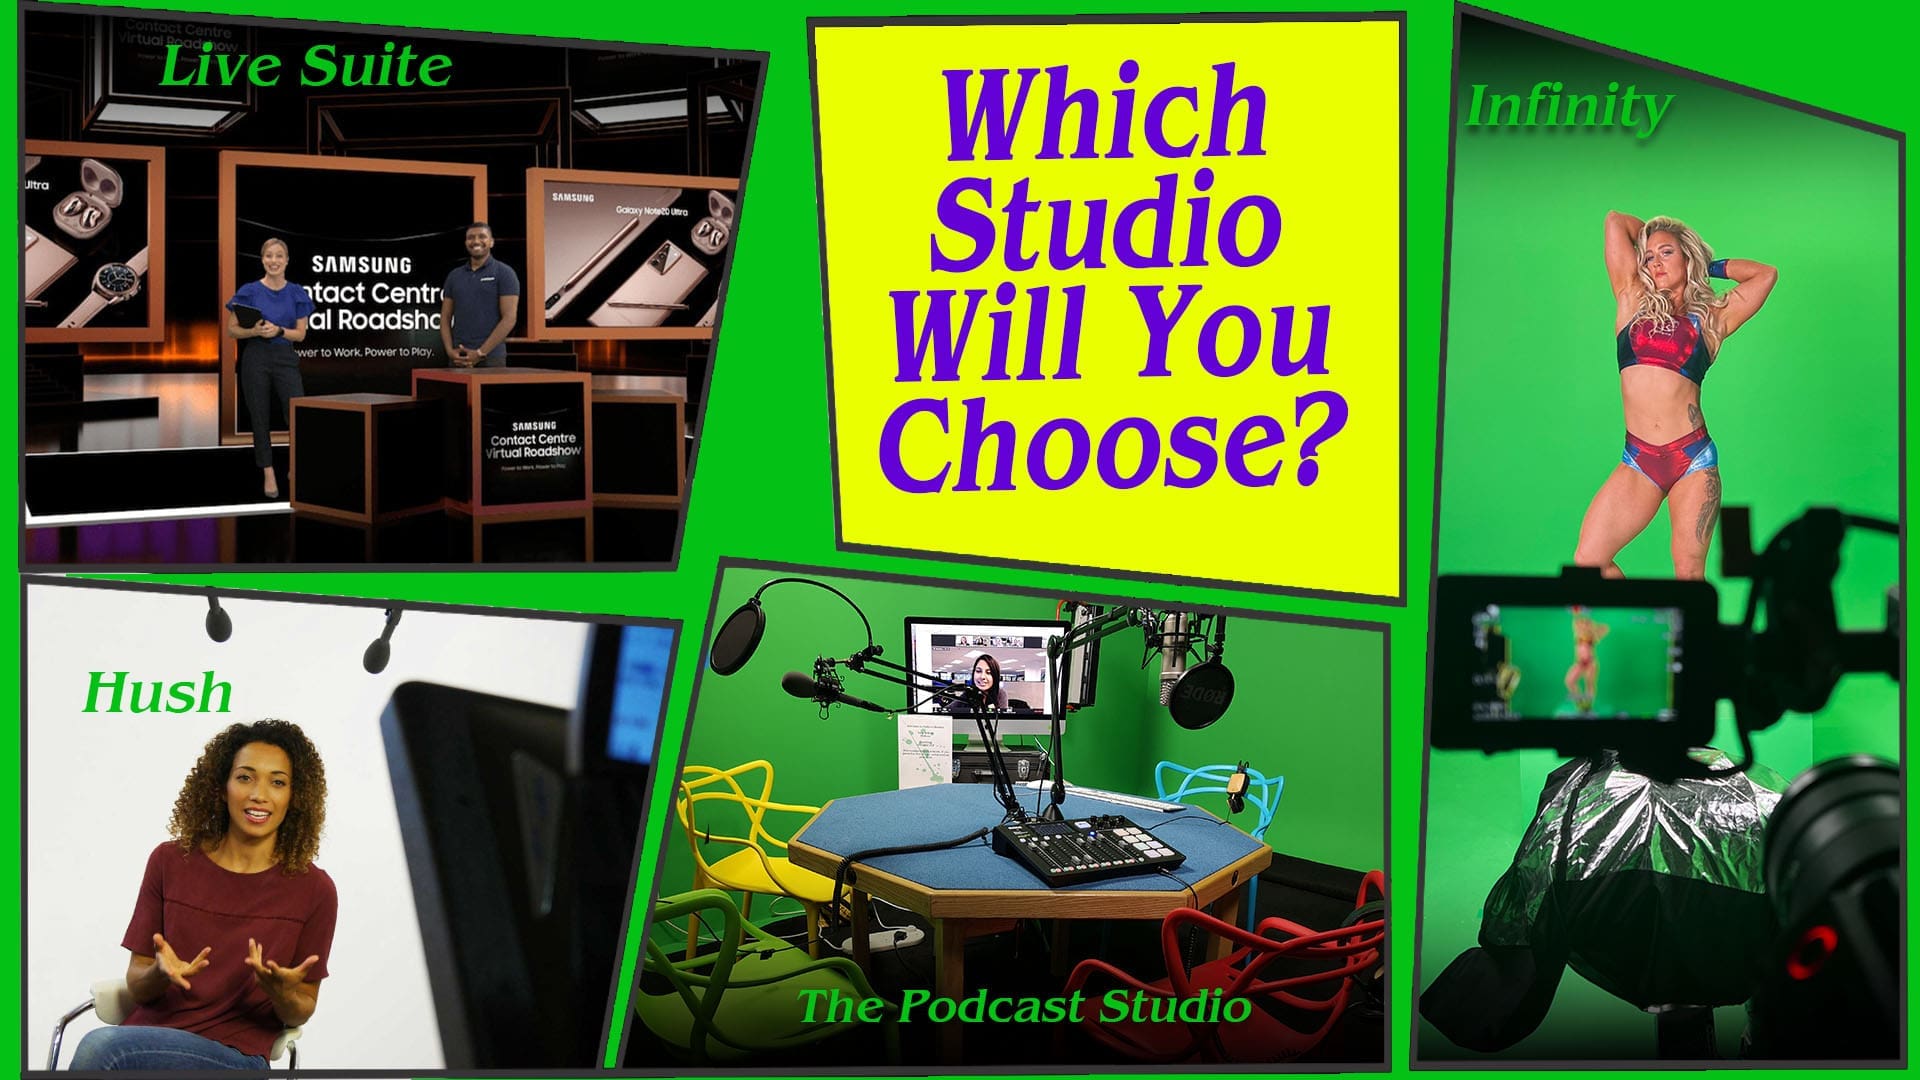 galleon studios which studio will you choose image